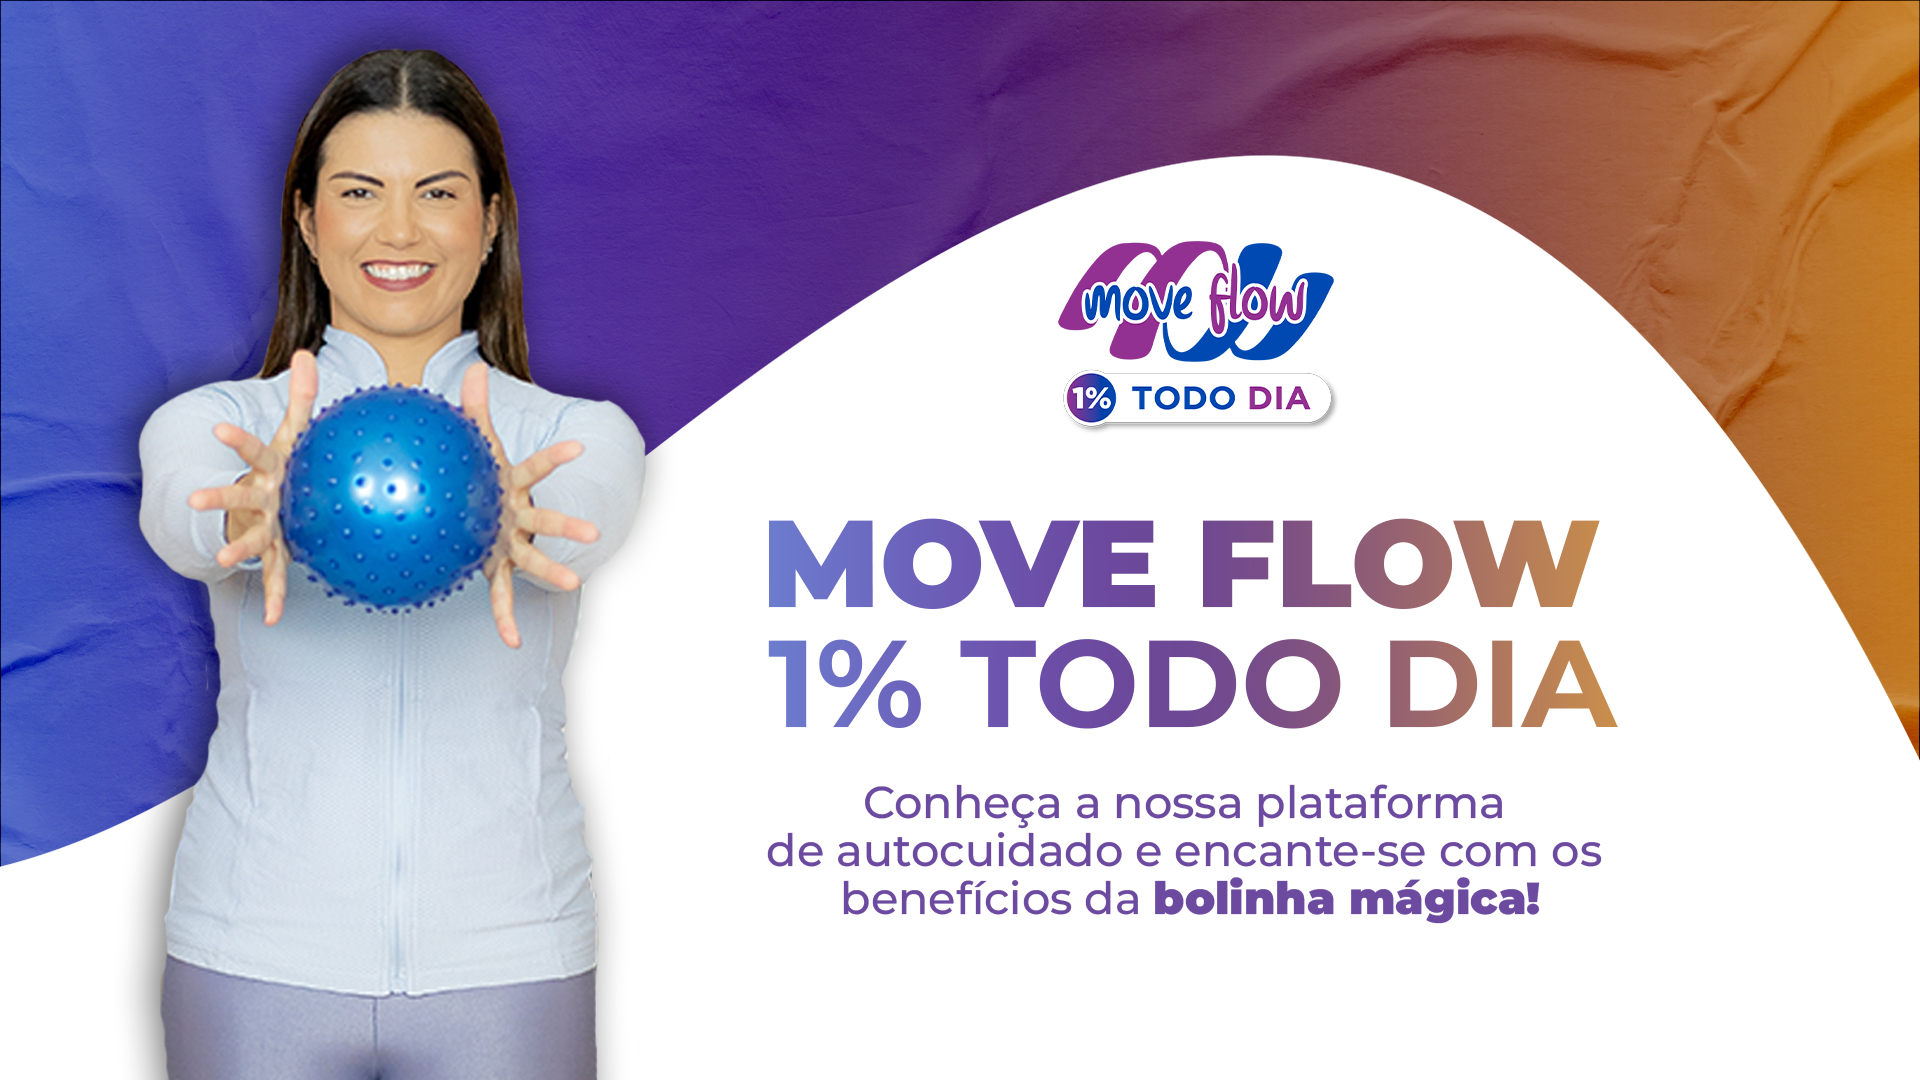 MOVE FLOW 1% TODO DIA